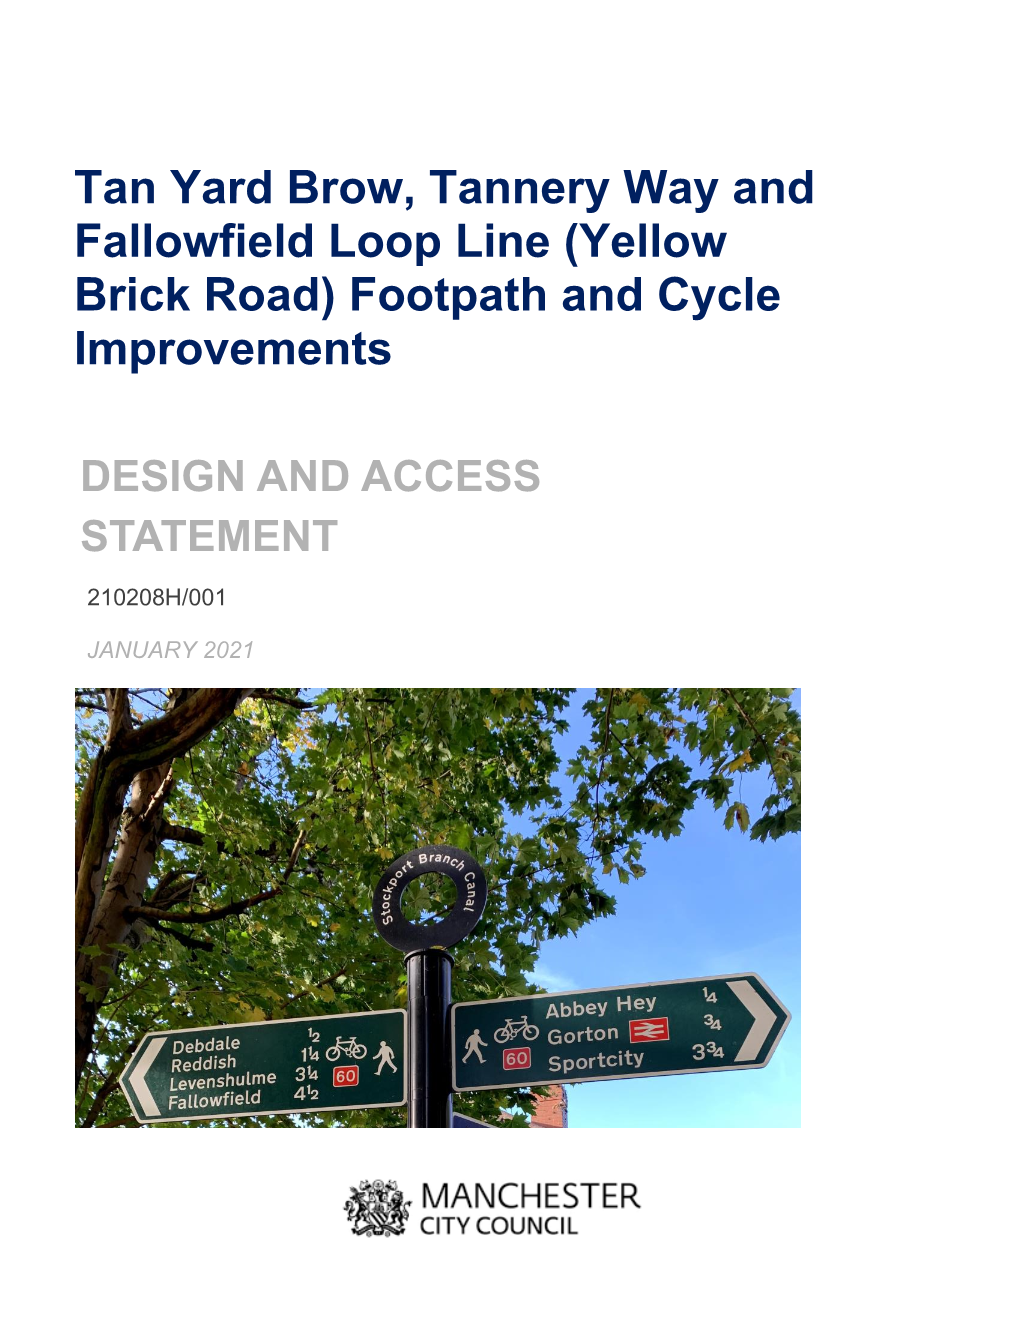 Tan Yard Brow, Tannery Way and Fallowfield Loop Line (Yellow Brick Road) Footpath and Cycle Improvements